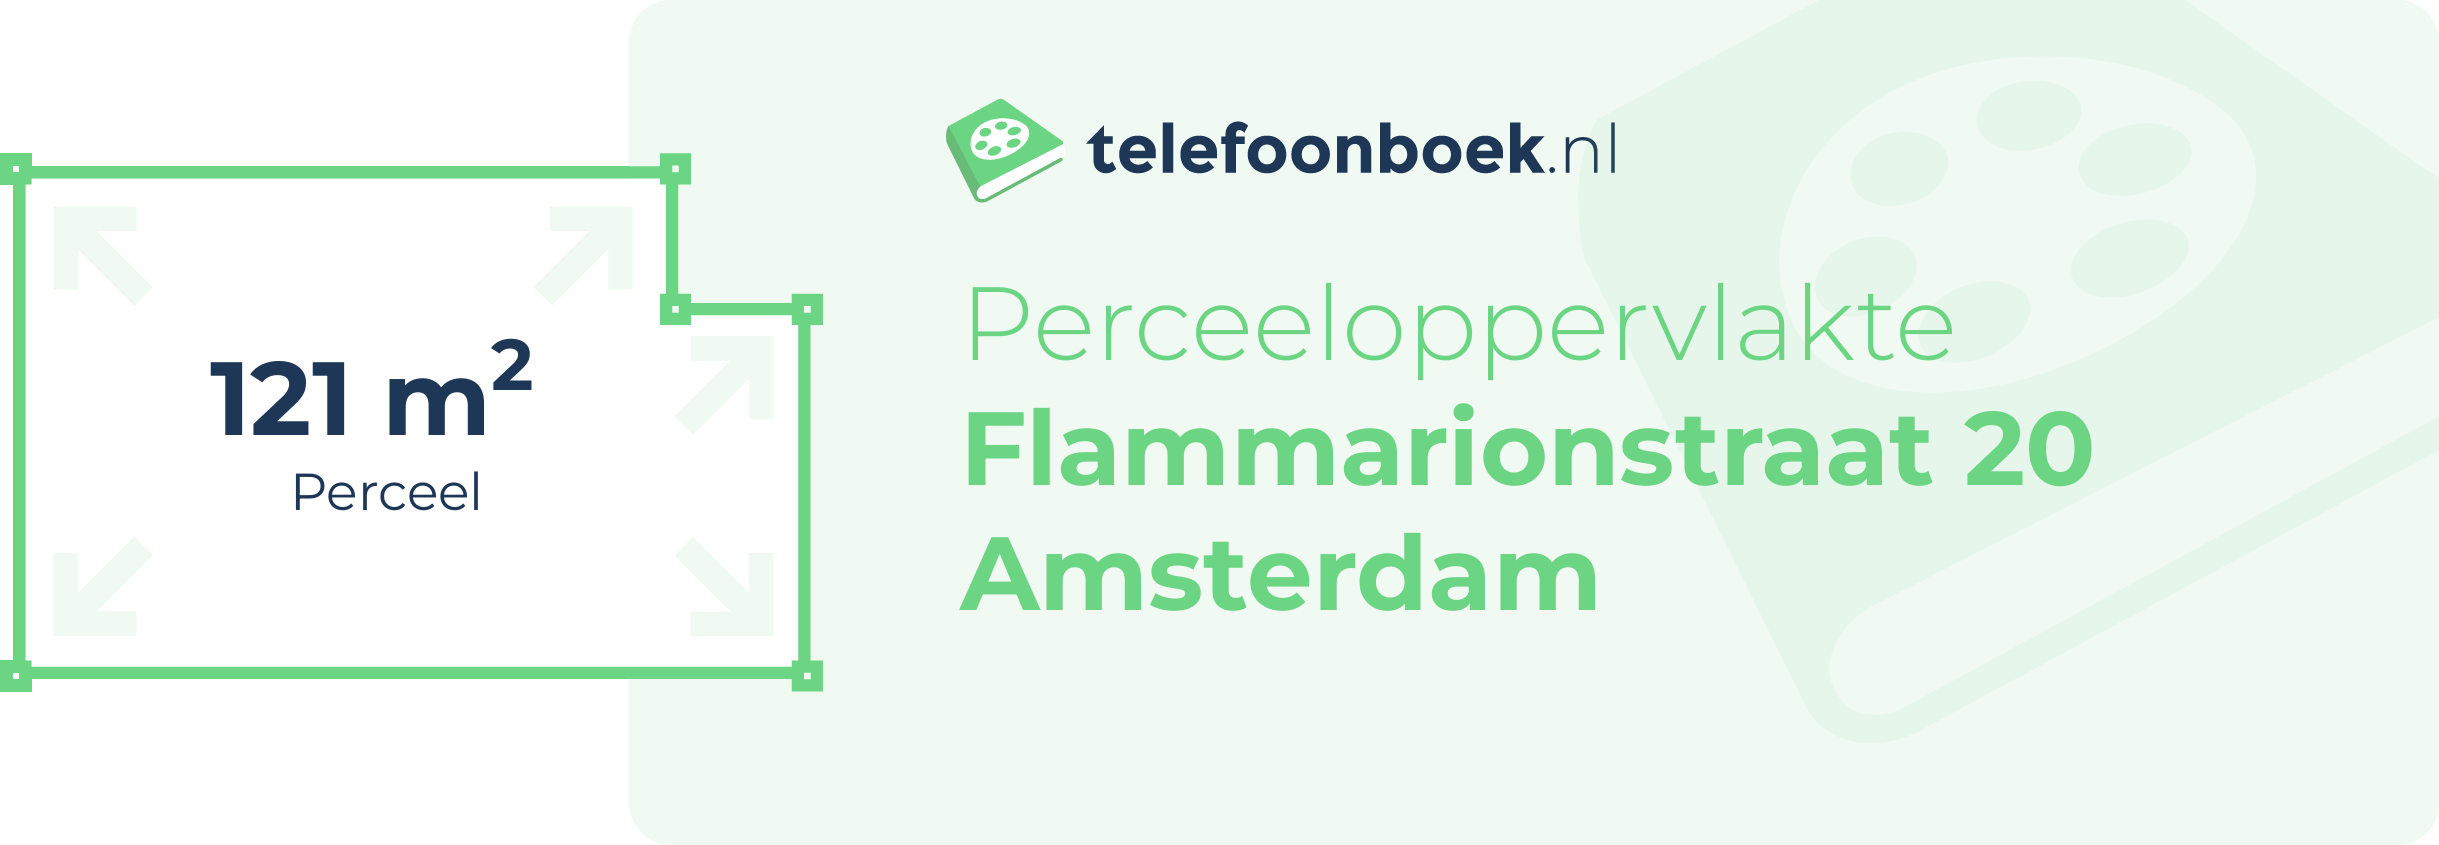 Perceeloppervlakte Flammarionstraat 20 Amsterdam